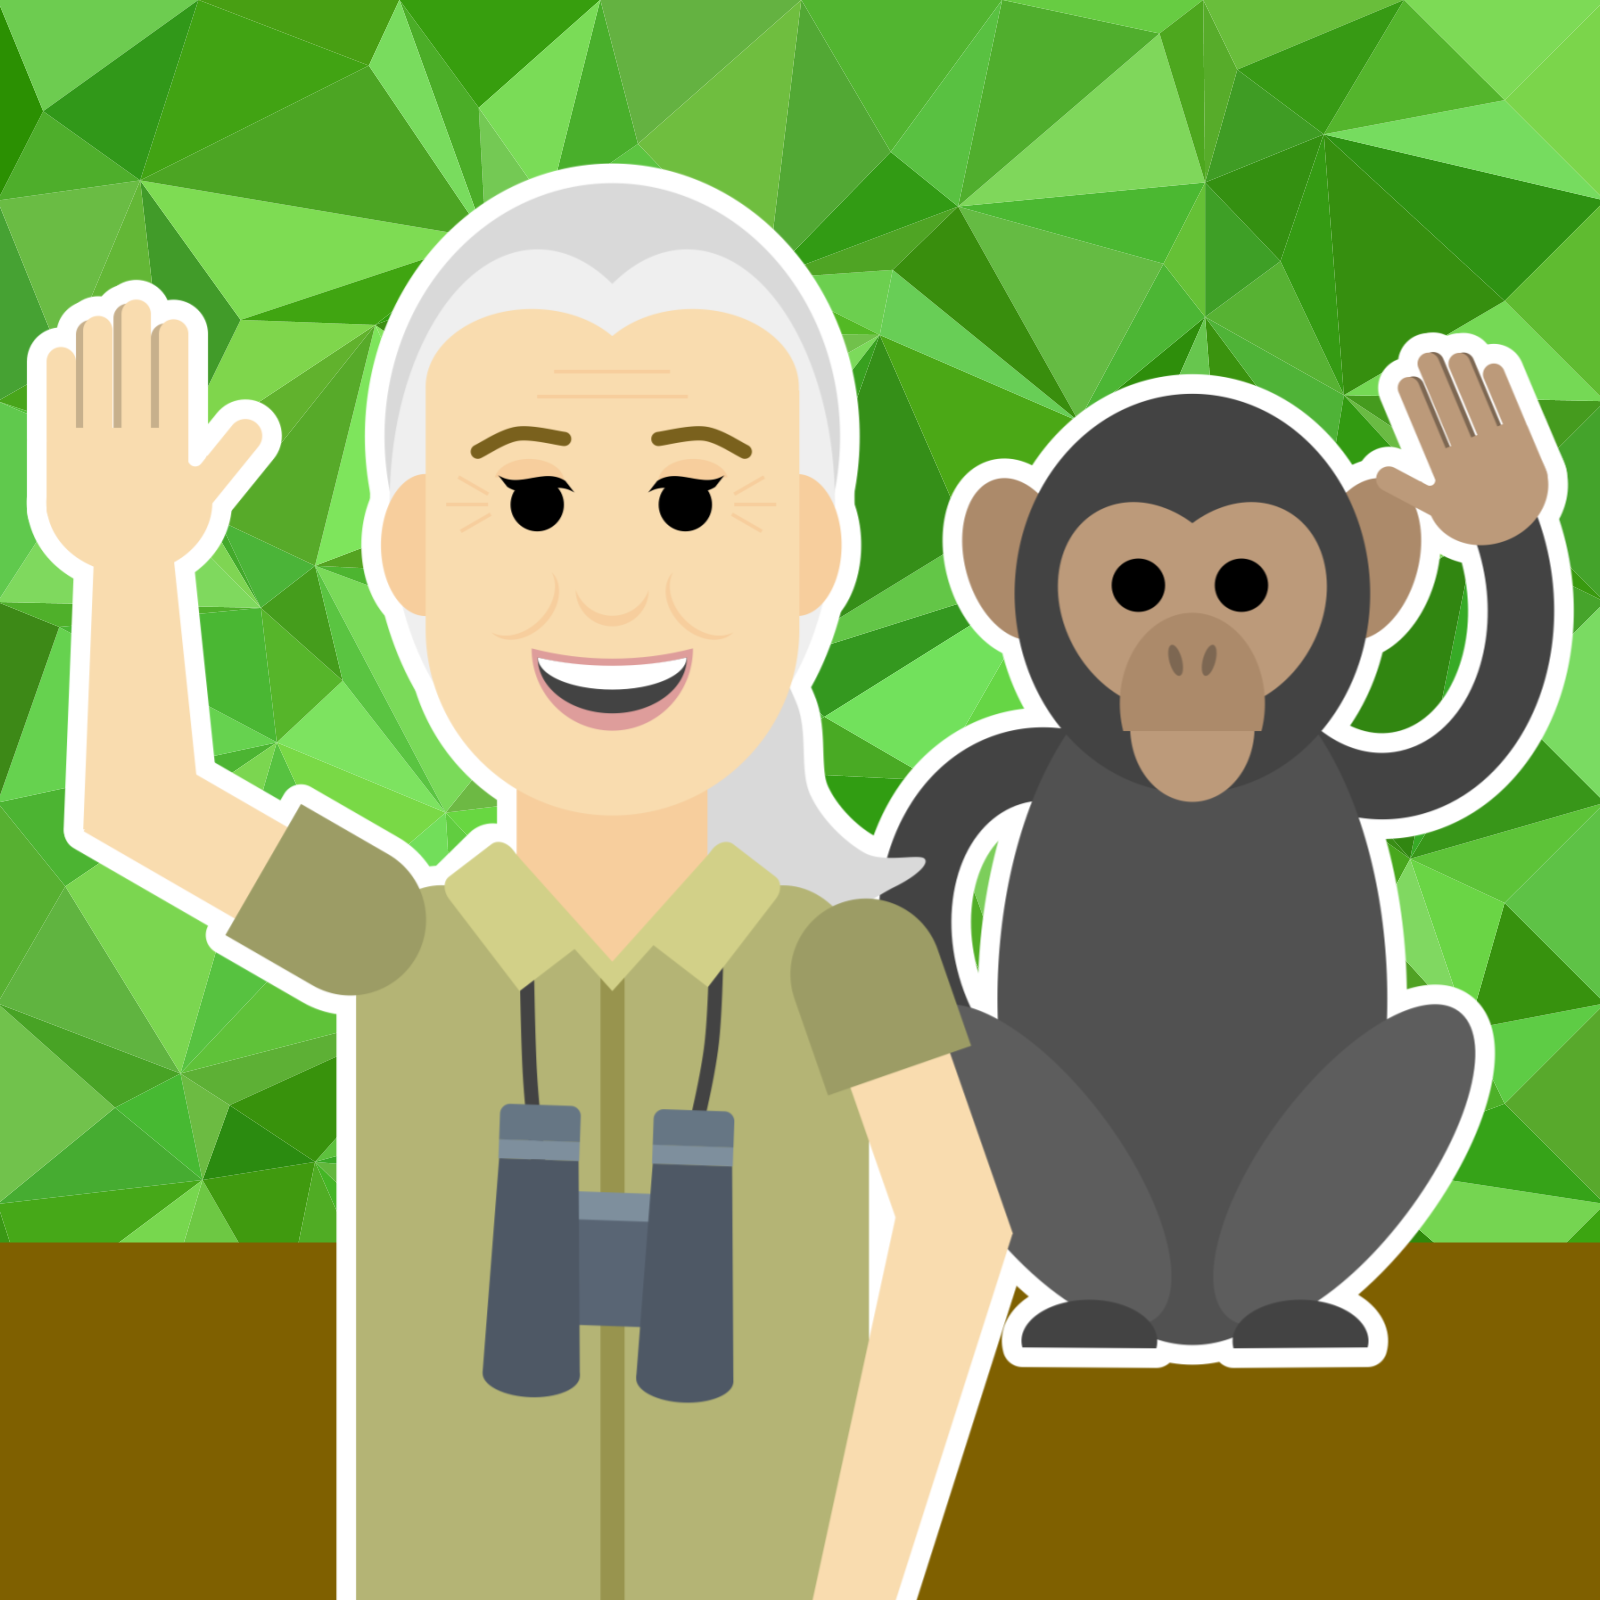 Jane Goodall and Chimpanzee Waving